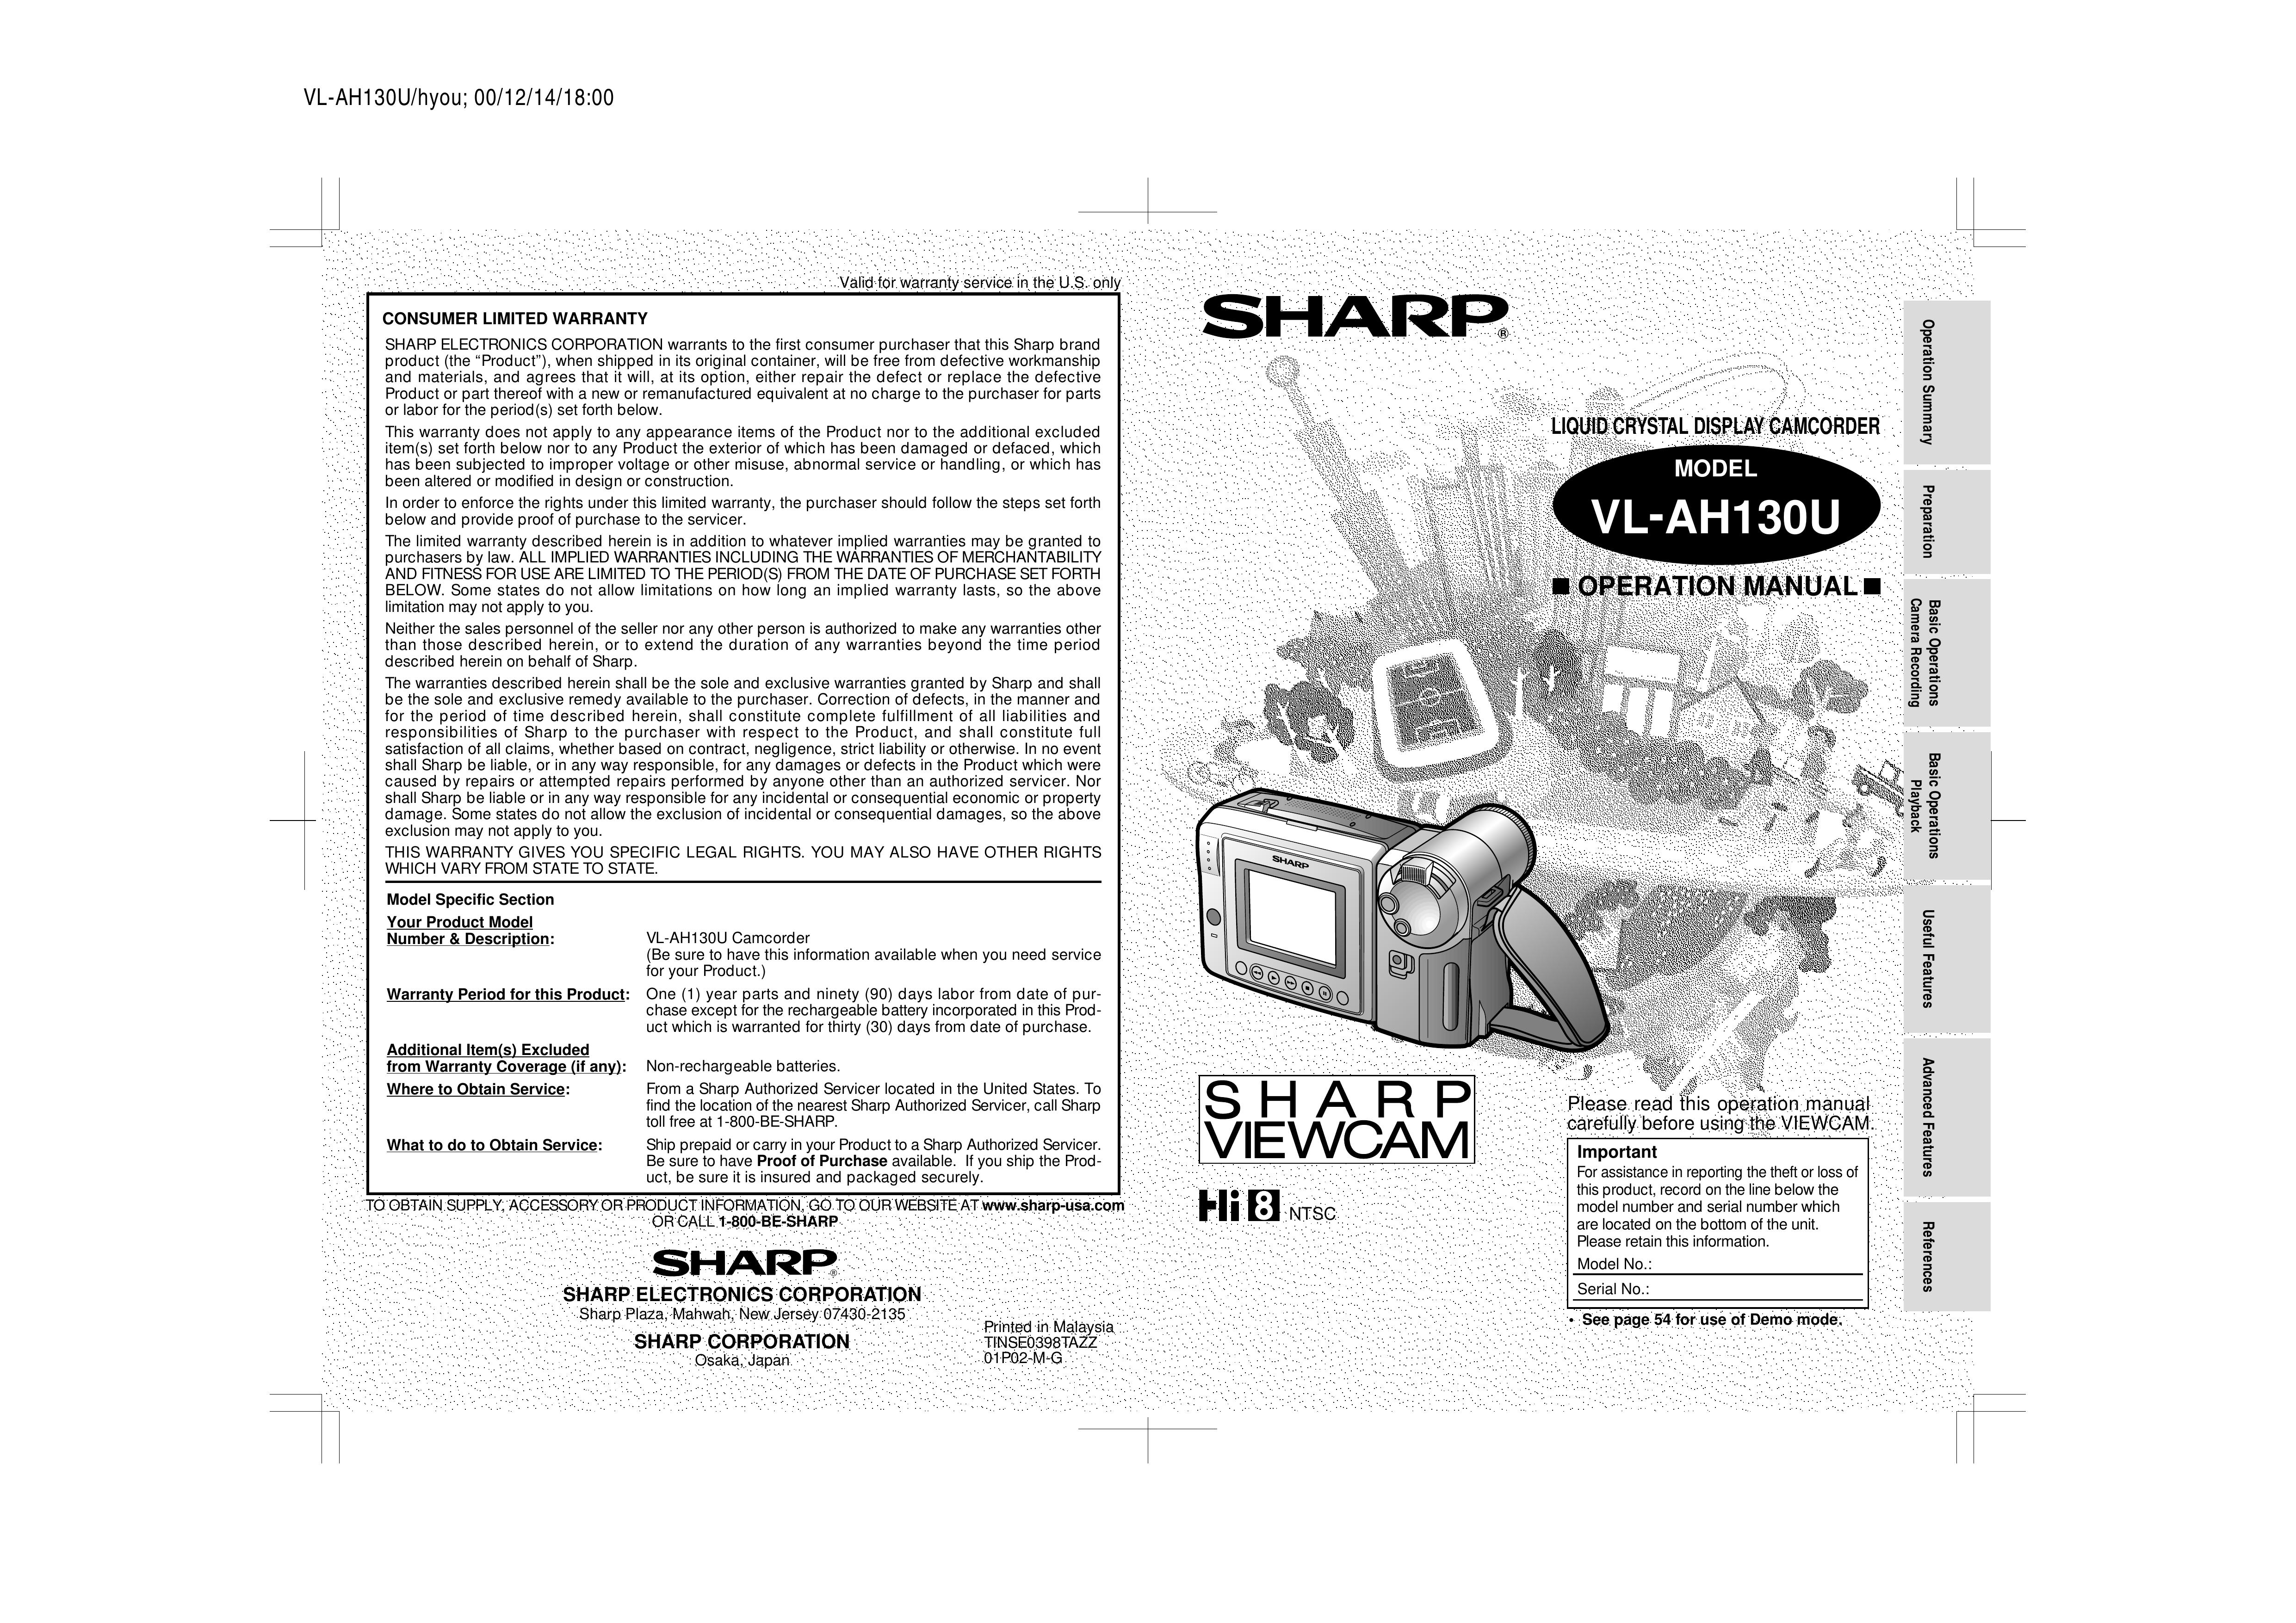 Sharp VL-AH130U Camcorder User Manual